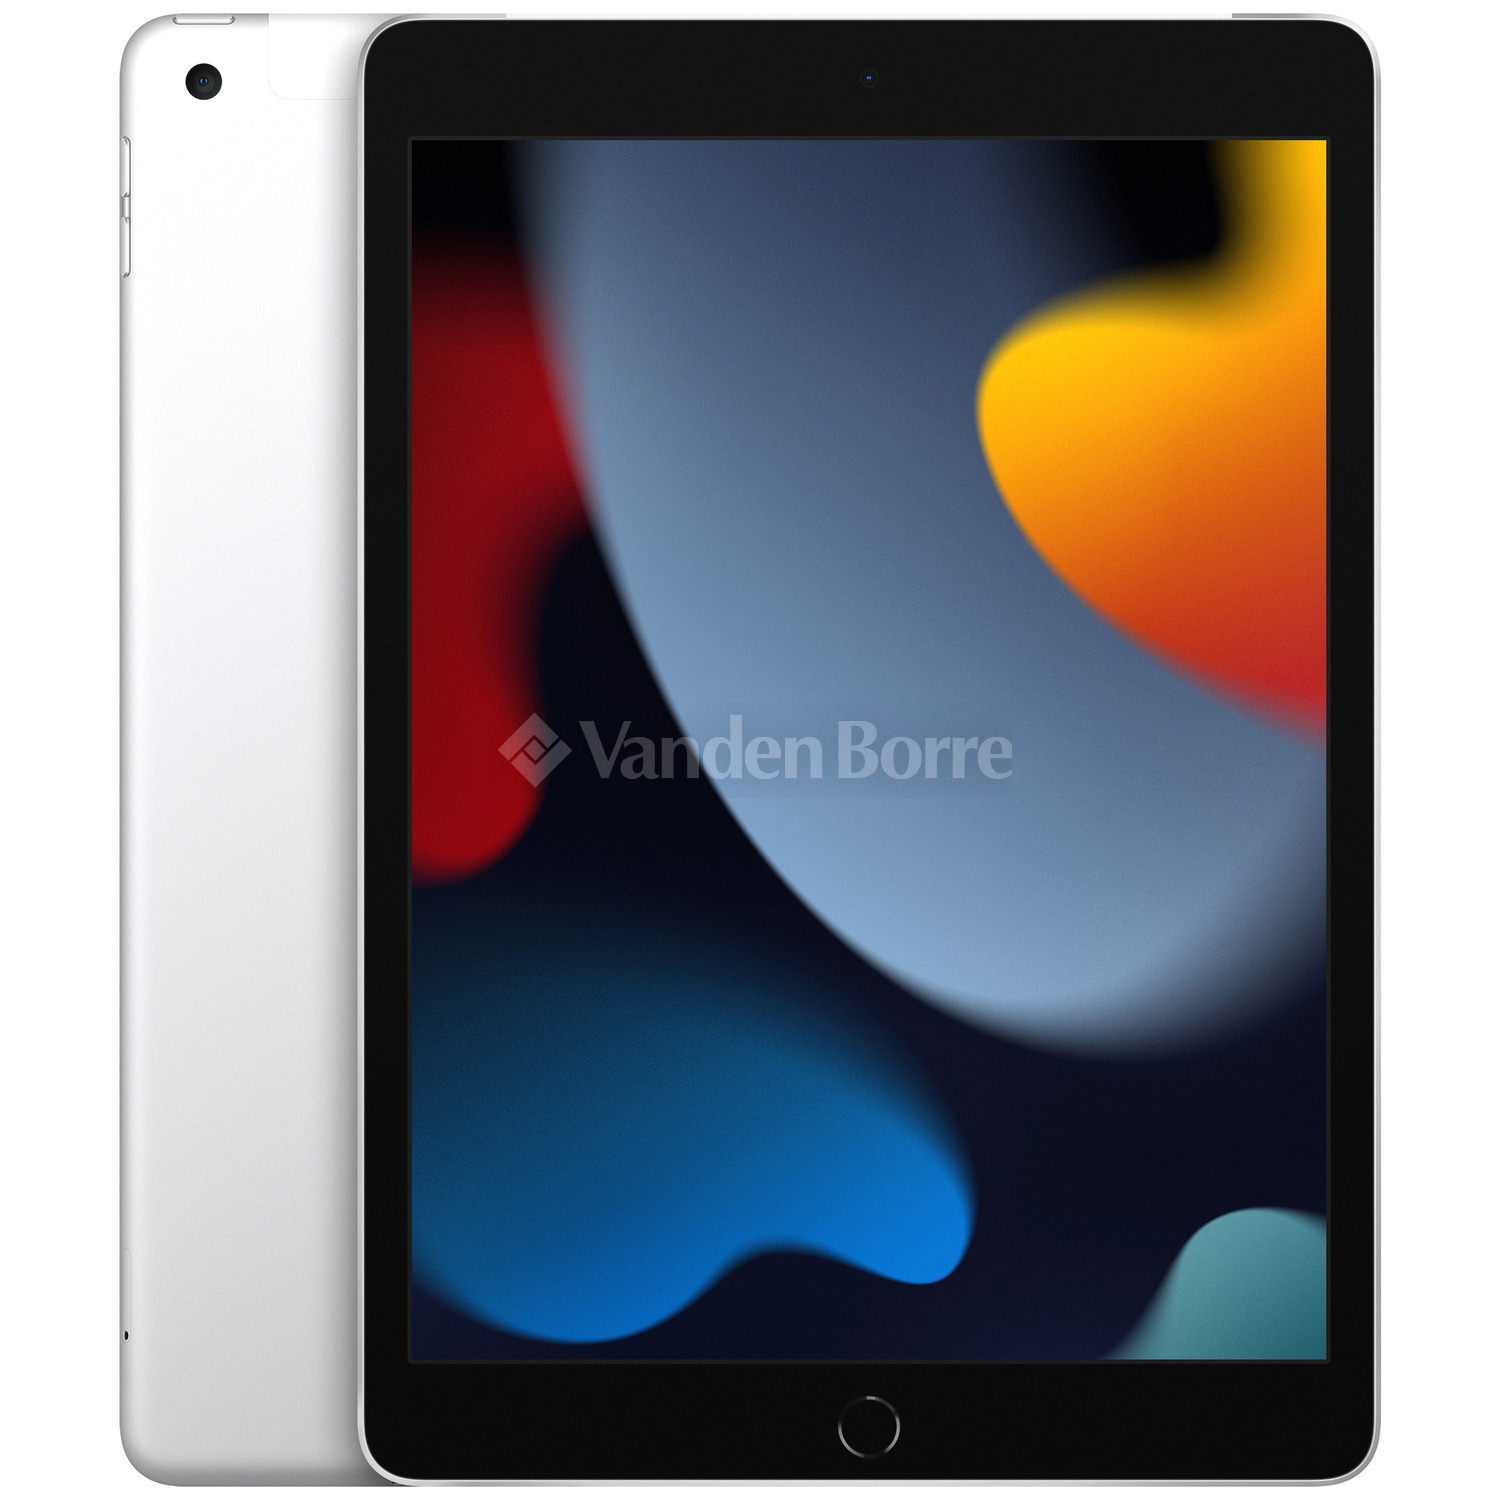 Verbanning haar Ochtend APPLE TABLET iPad (2021) 10.2 inch 64GB Wi-Fi + 4G Silver | Vanden Borre